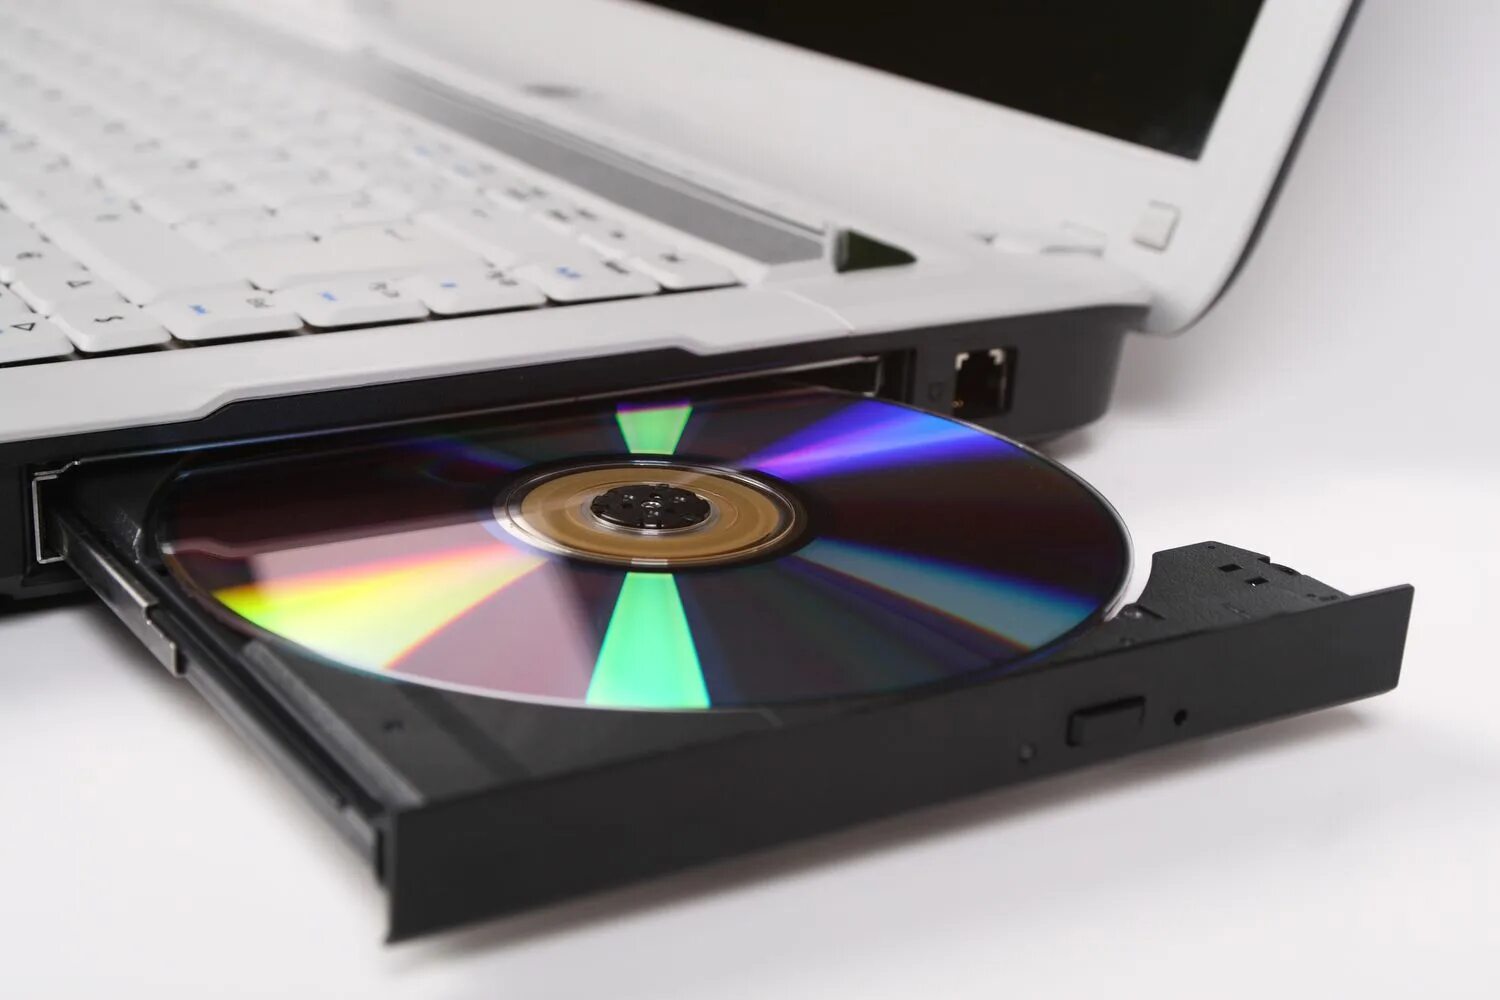 Дисковод CD-ROM. Привод для СД И двд дисков. CD (Compact Disk ROM) DVD (Digital versatile Disc). CD ROM x3.